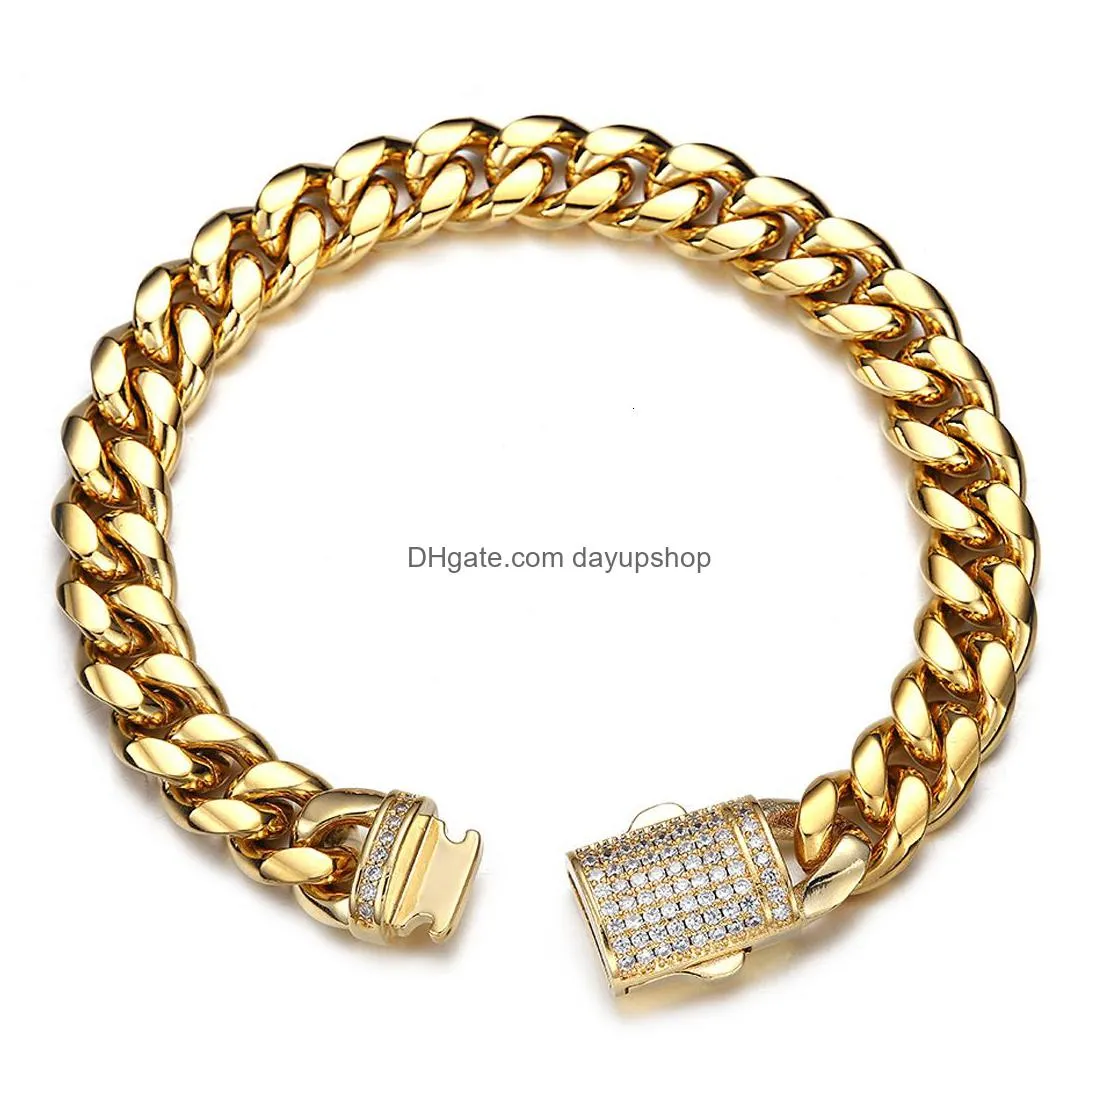 charm bracelets 68101214mm men chain bracelet stainless steel curb cuban link bangle for male women hiphop wrist jewelry gift 230216